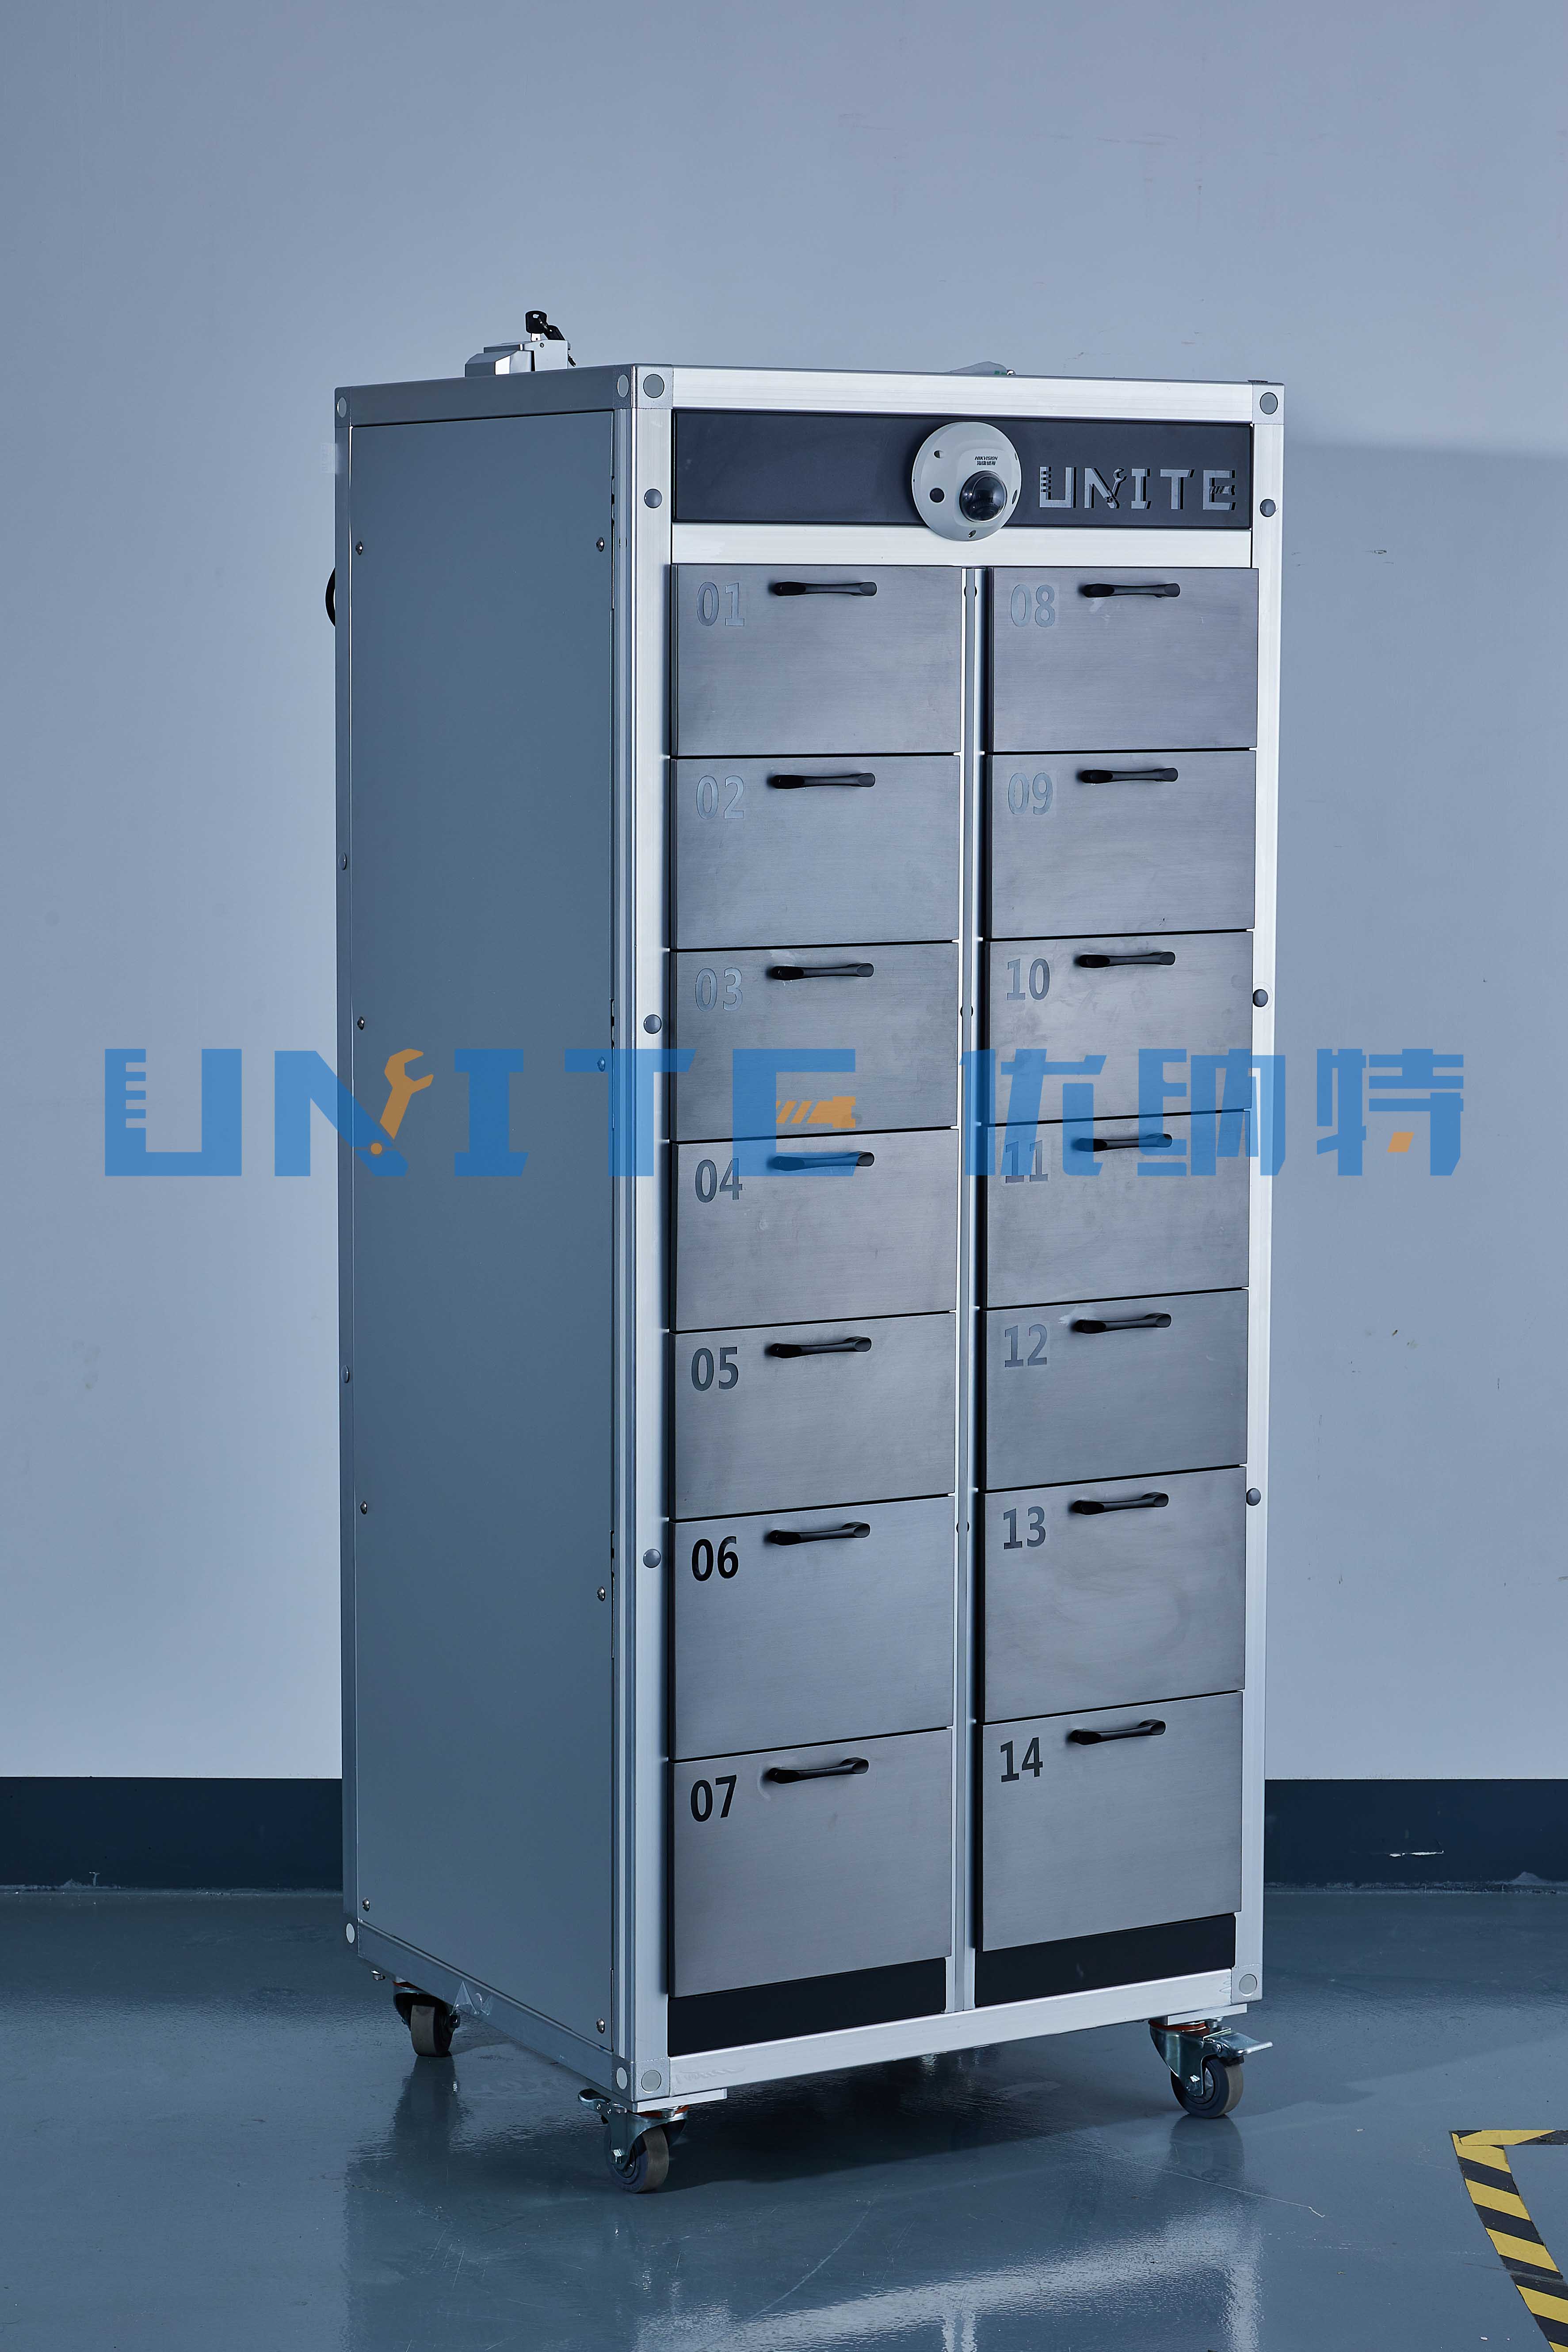 Unite Usample V1.2 Laboratory Sample Management System Matrix IoT Room Temperature Storage Box for Standard Products, Drugs